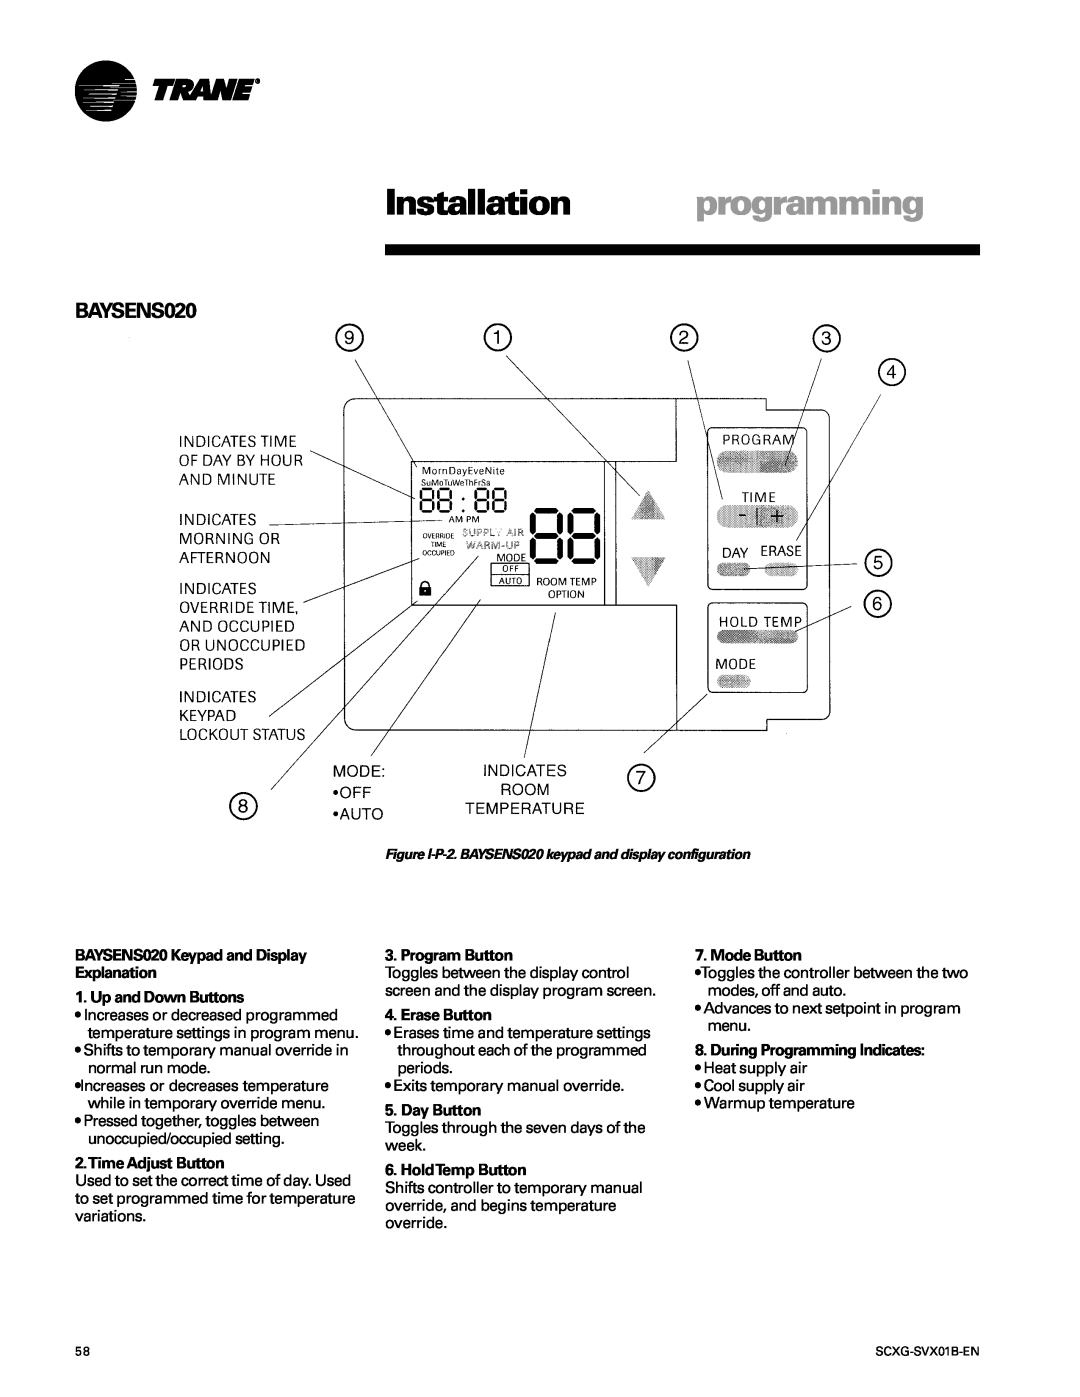 Trane SCXG-SVX01B-EN manual Installation programming, BAYSENS020 Keypad and Display Explanation, Up and Down Buttons 